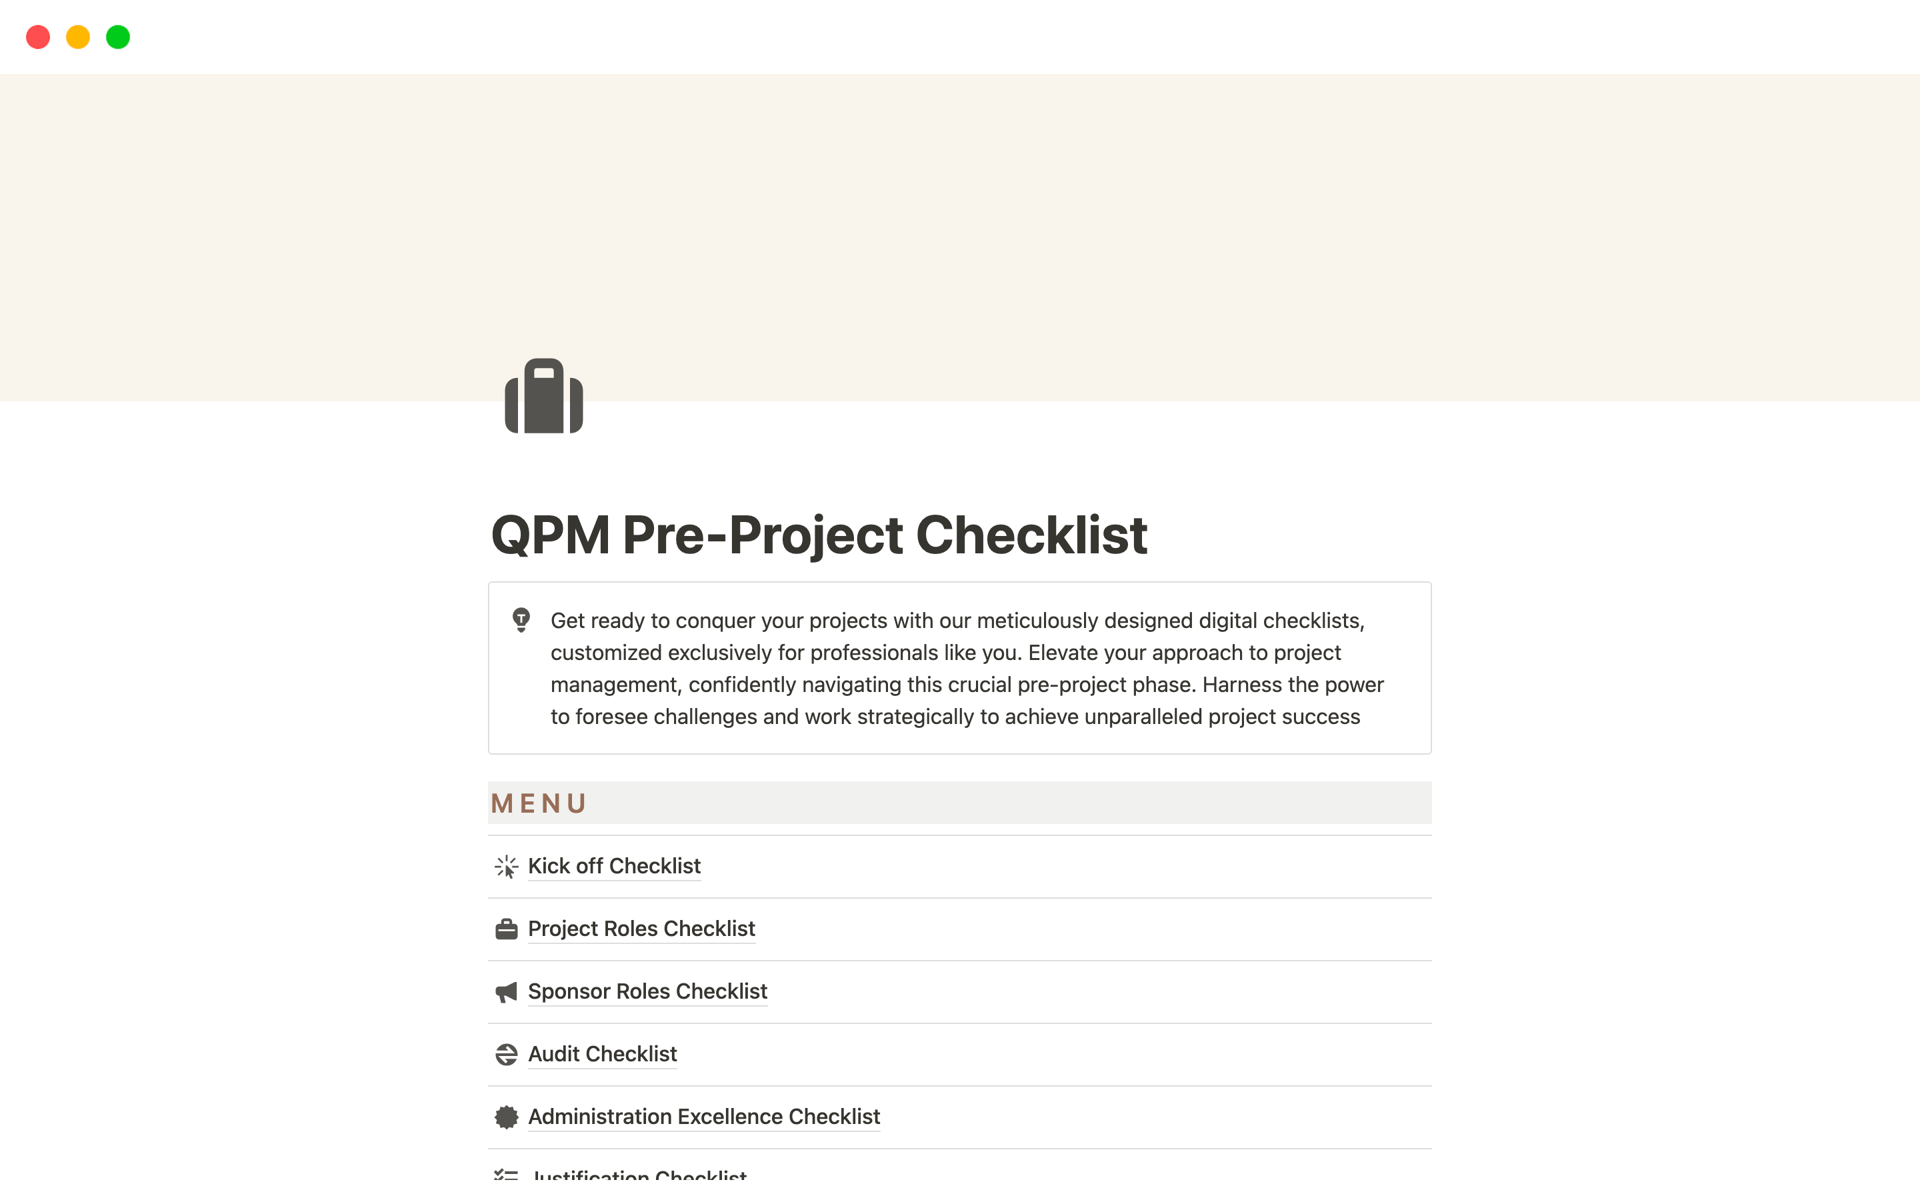 Vista previa de plantilla para QPM Pre-Project Checklist